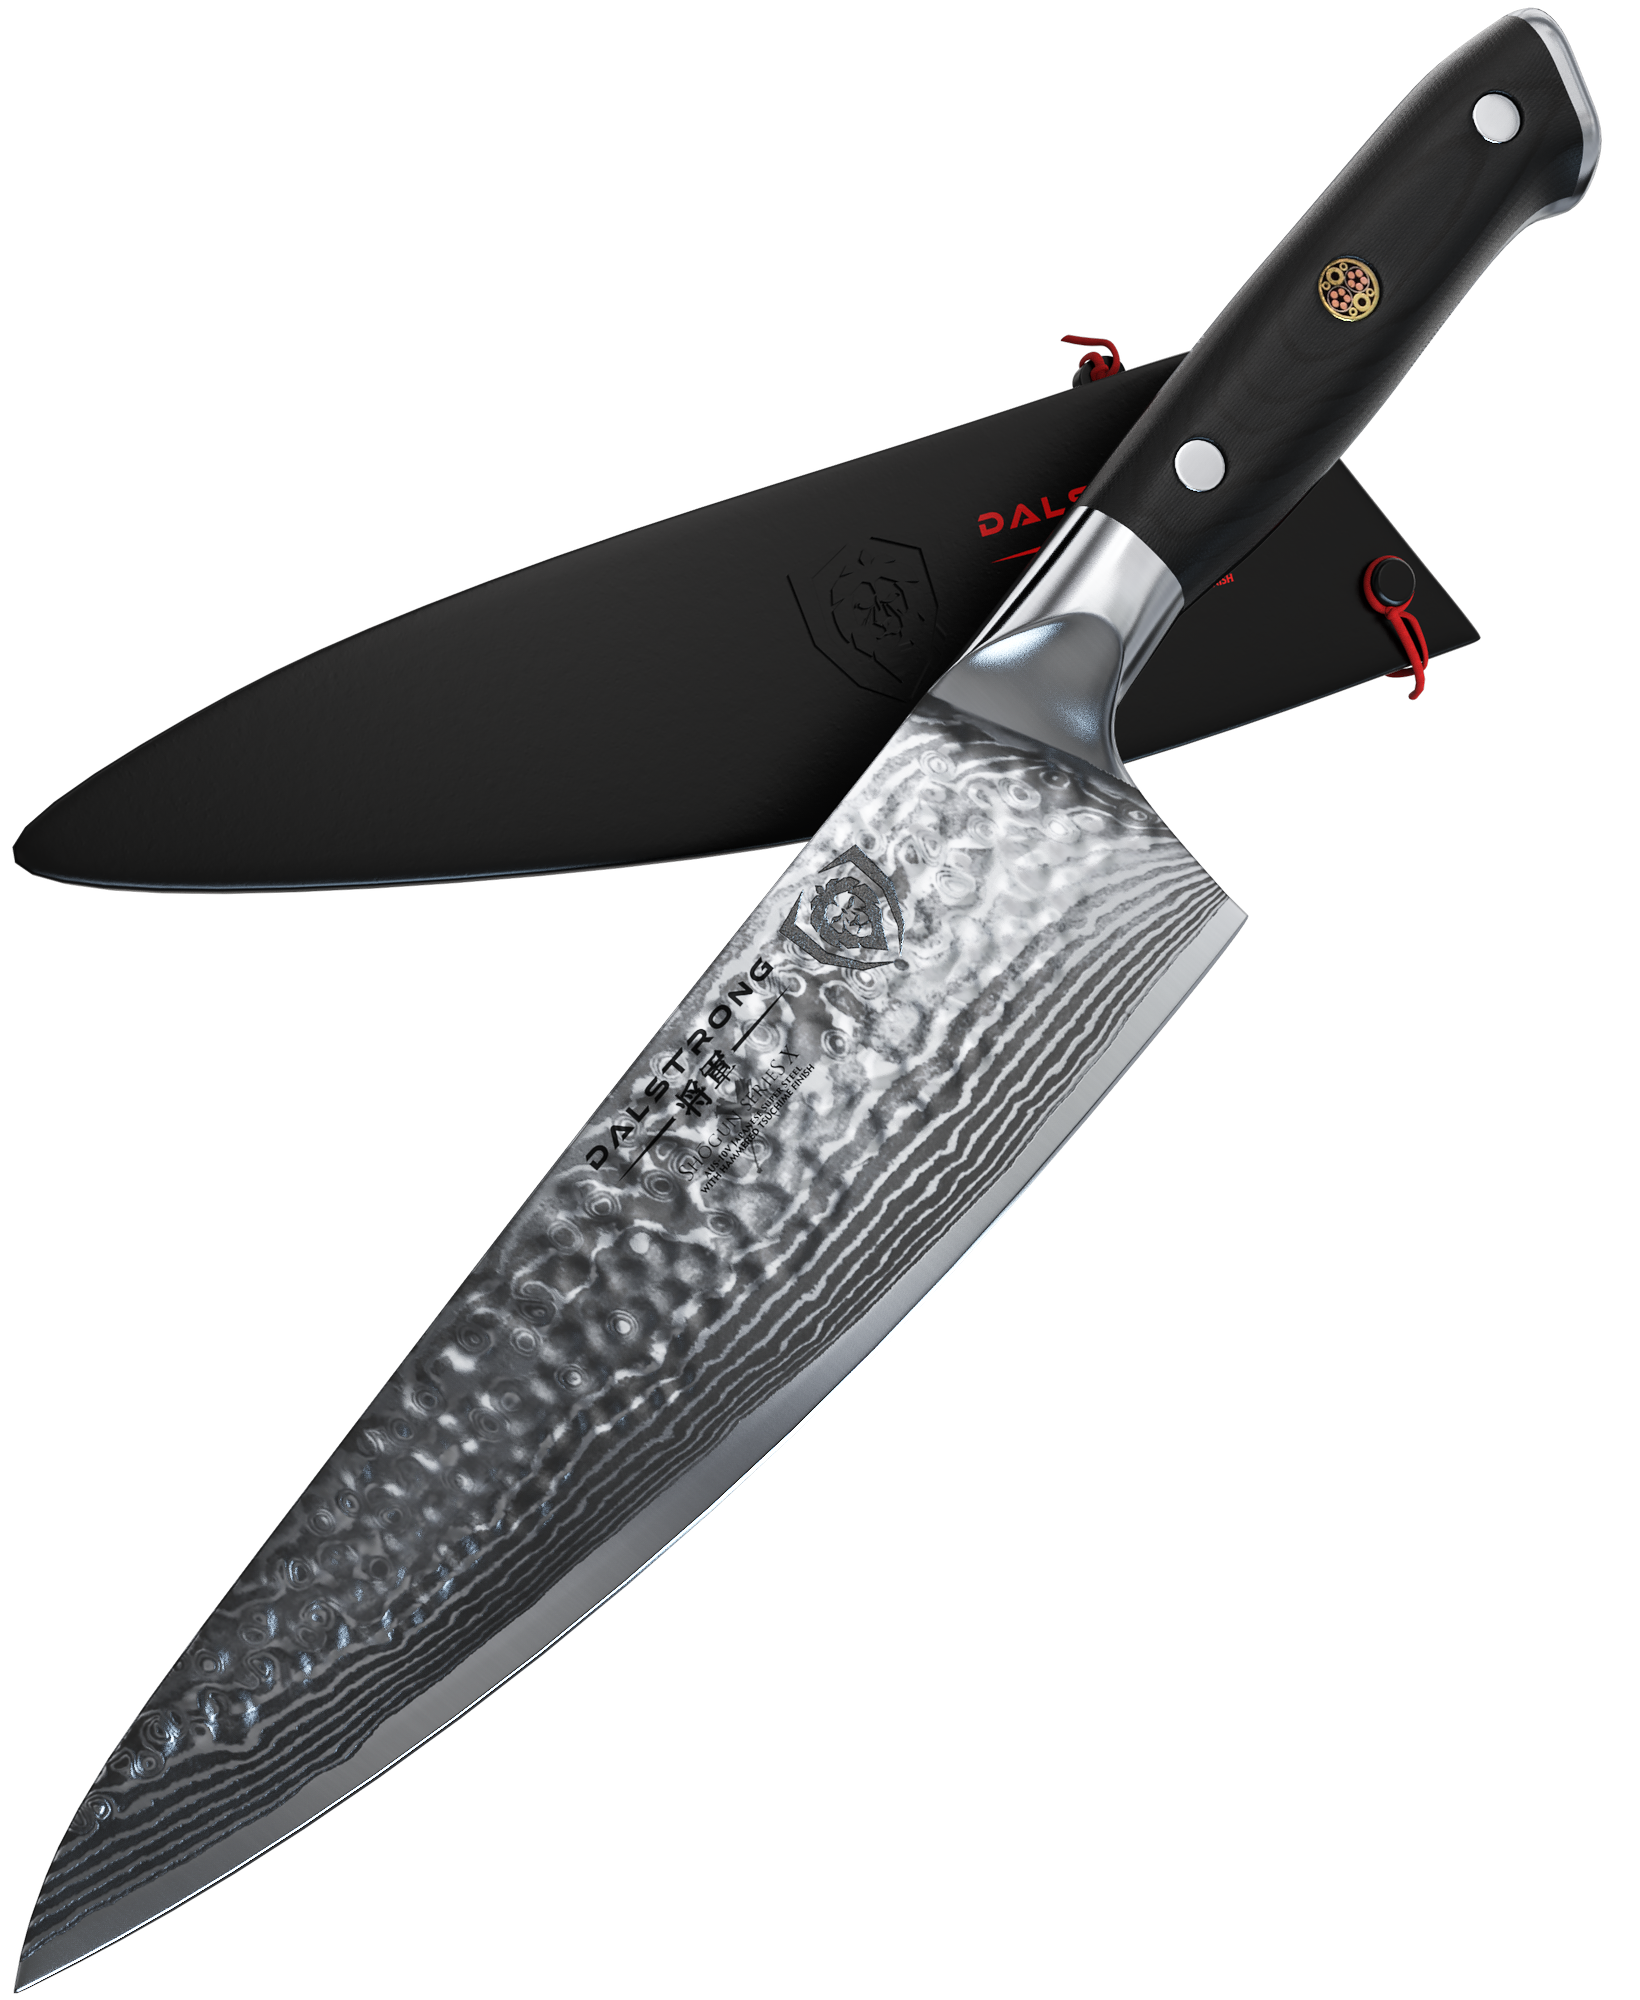 Dalstrong Chef Knife - 8 inch Blade - Shogun Series - Japanese AUS-10V Super Steel Kitchen Knife - Flame Orange Handle ABS - Damascus - Razor Sharp